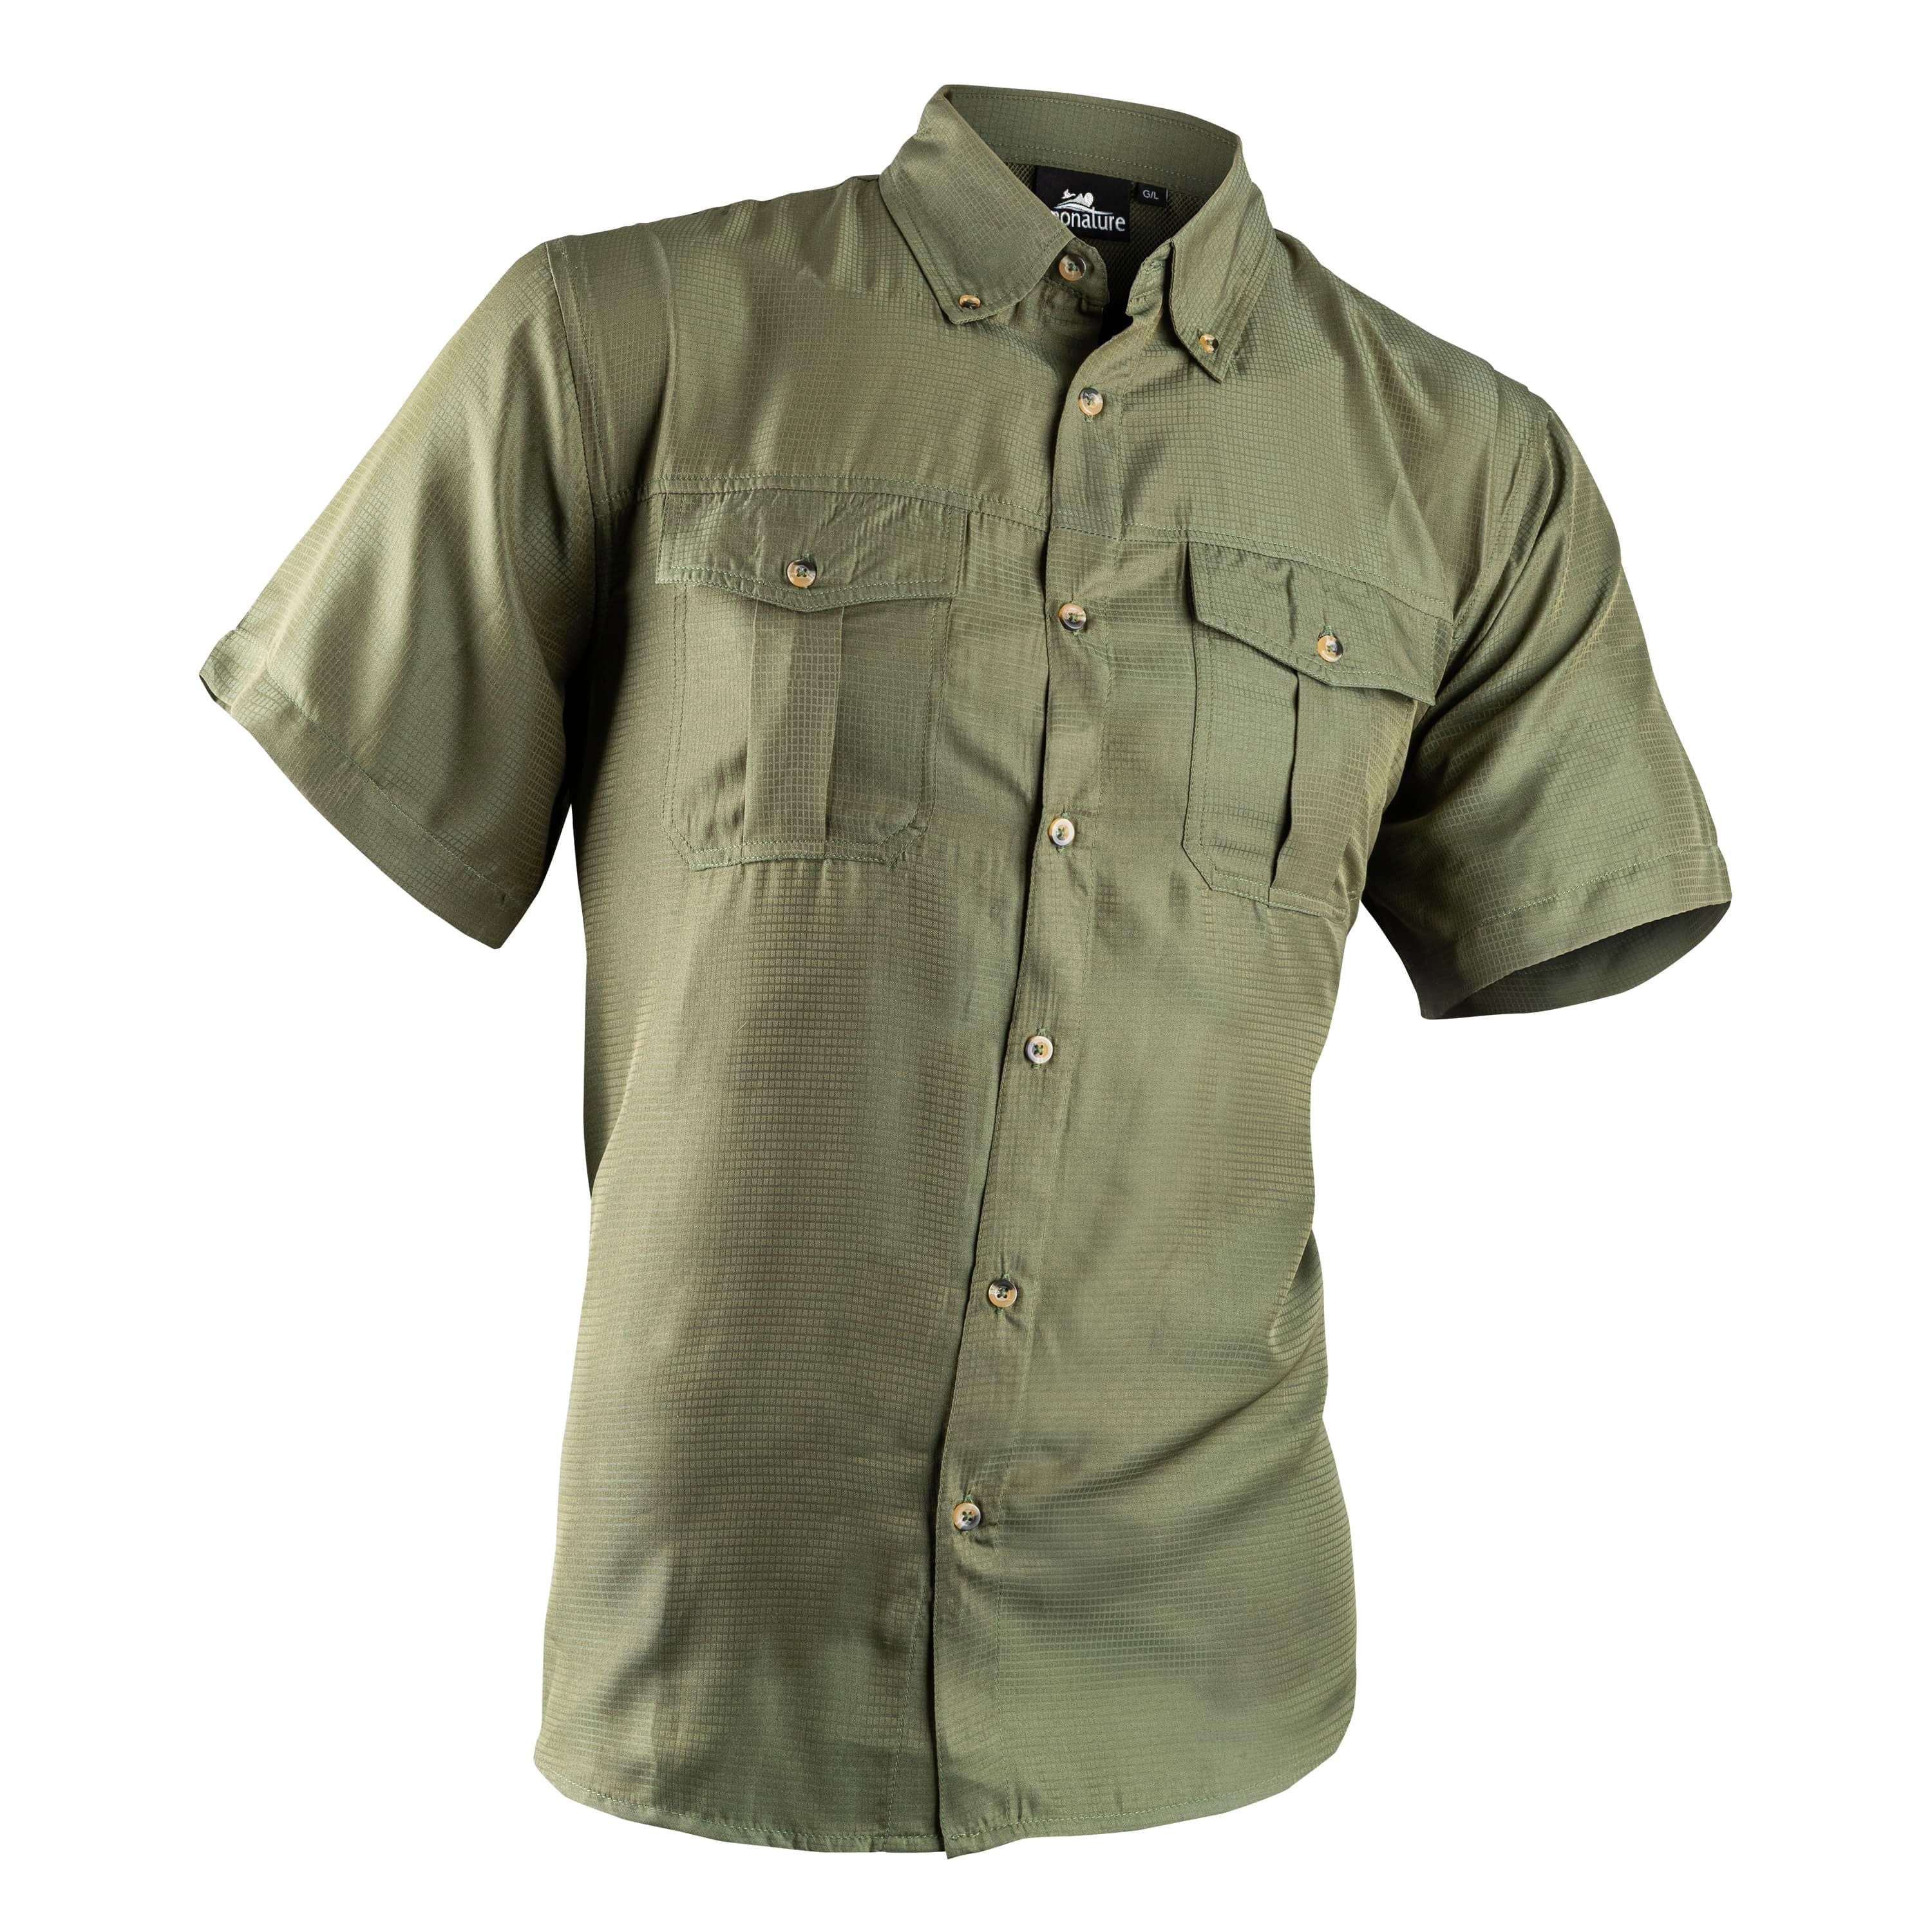 Breathe Short sleeve fishing shirt - Men's